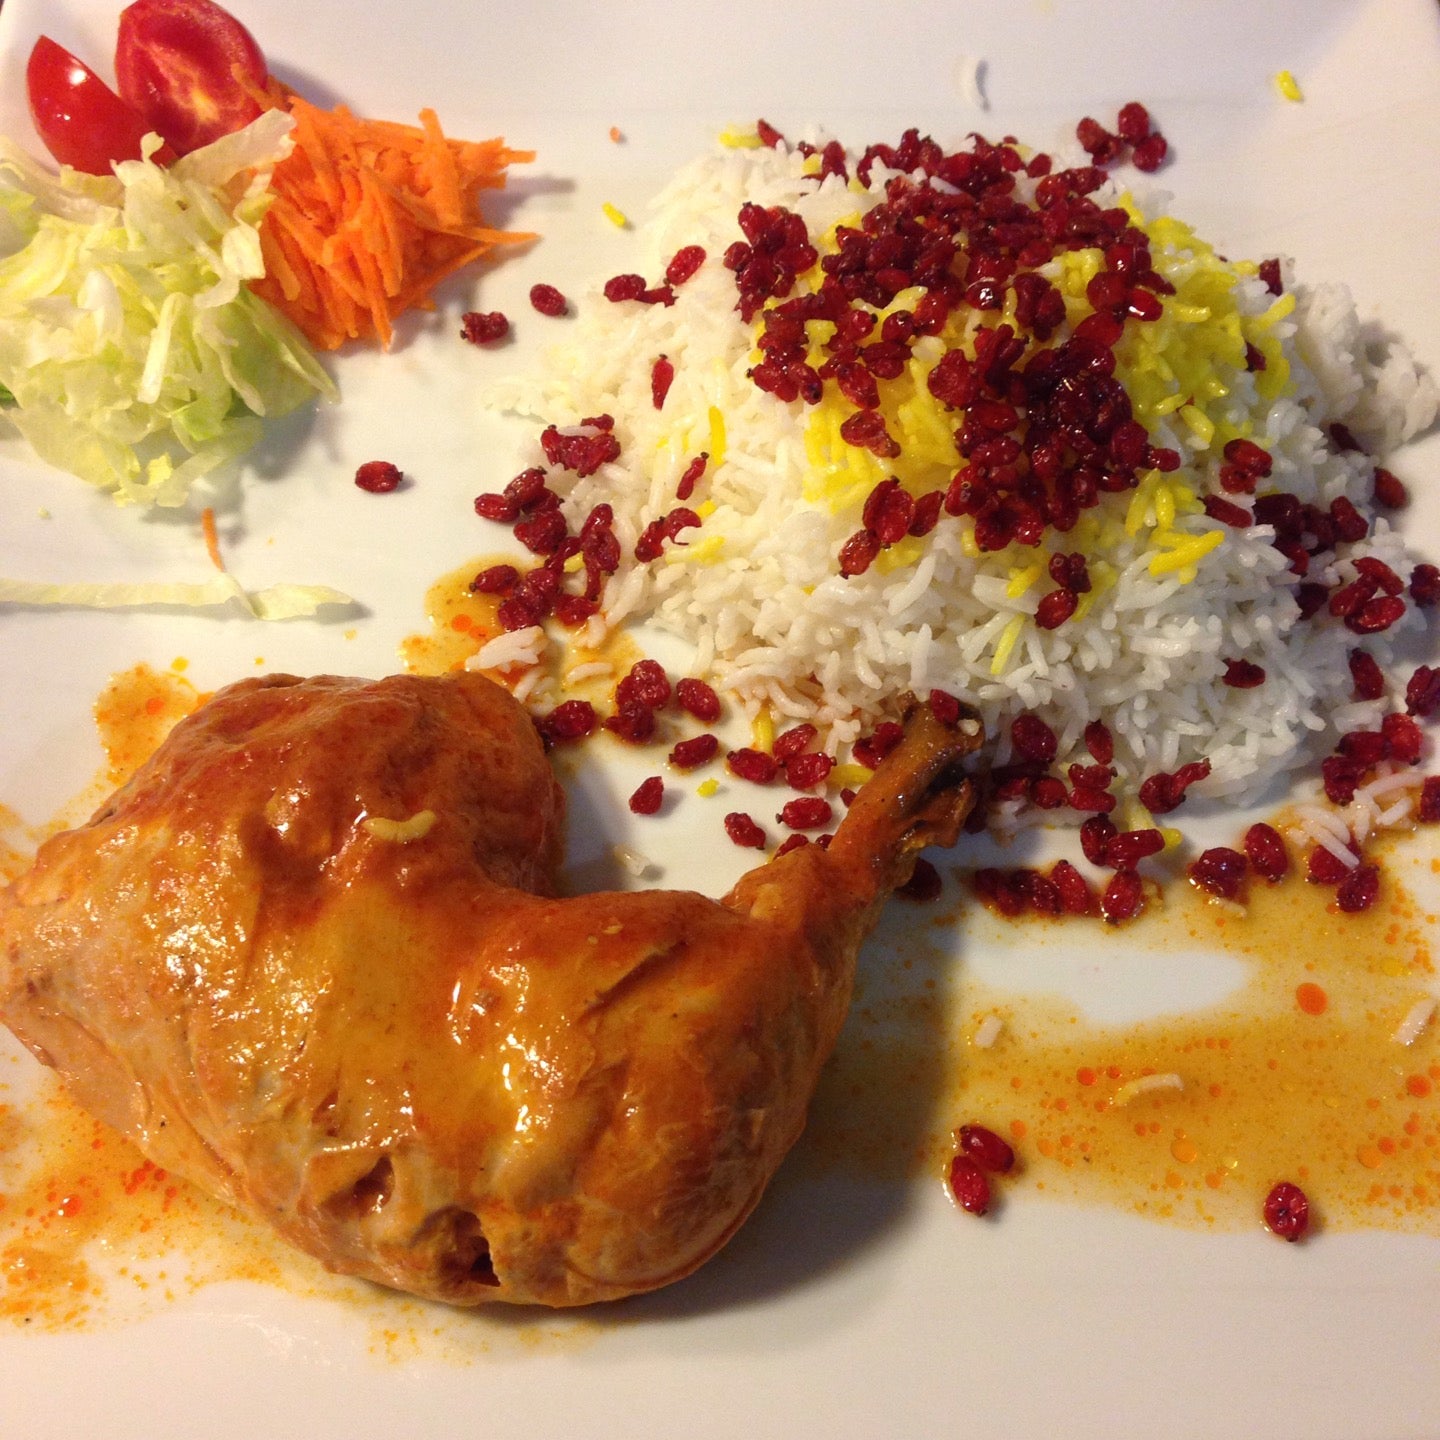 Reyhun Iranian Restaurant